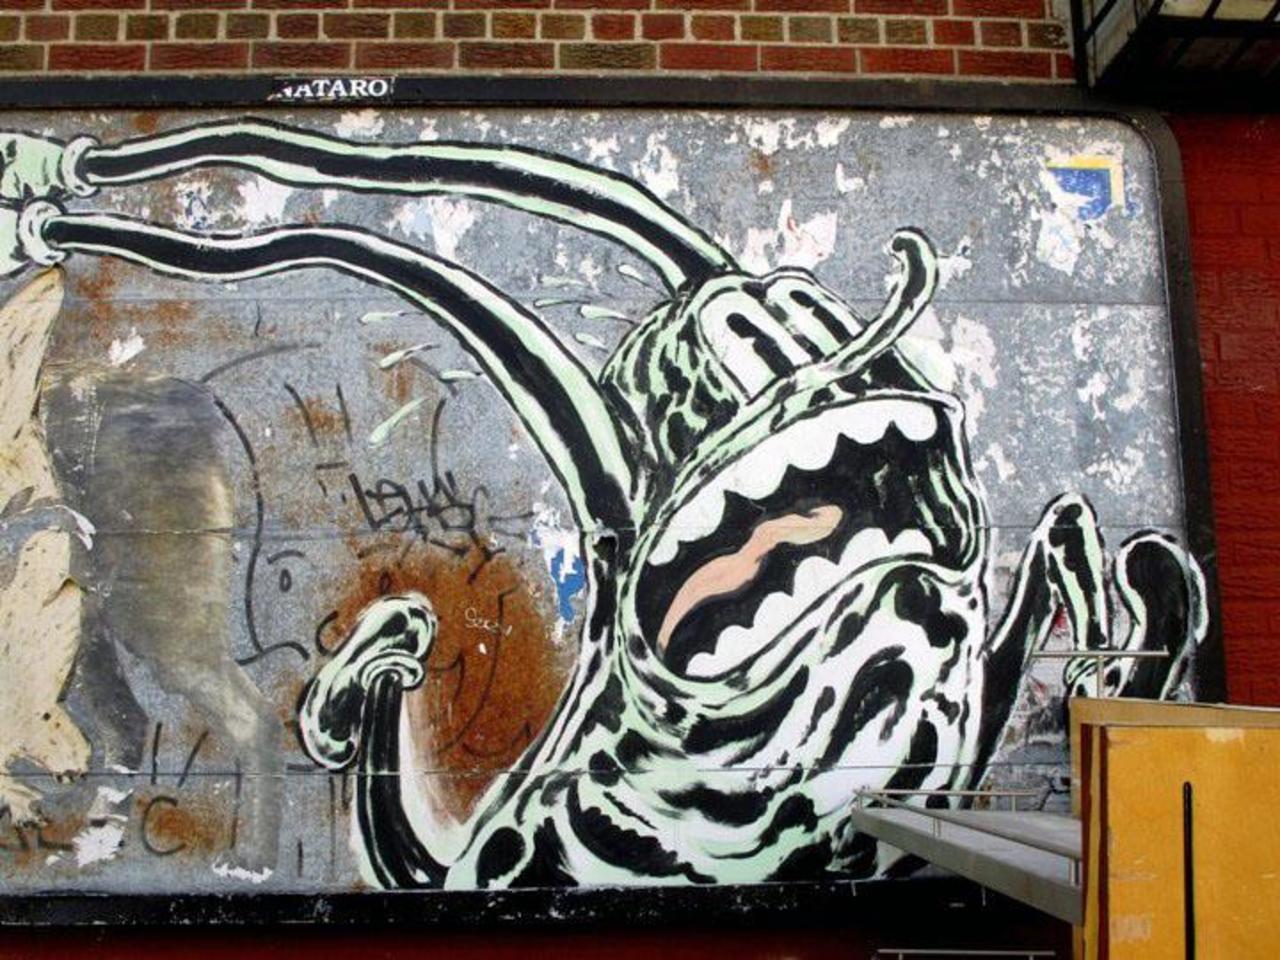 RT @IndieUndrground: - Indie Underground - Street Art Brooklyn, NY - #art #graffiti #graff #streetart #painting http://t.co/7s30a3JHDB